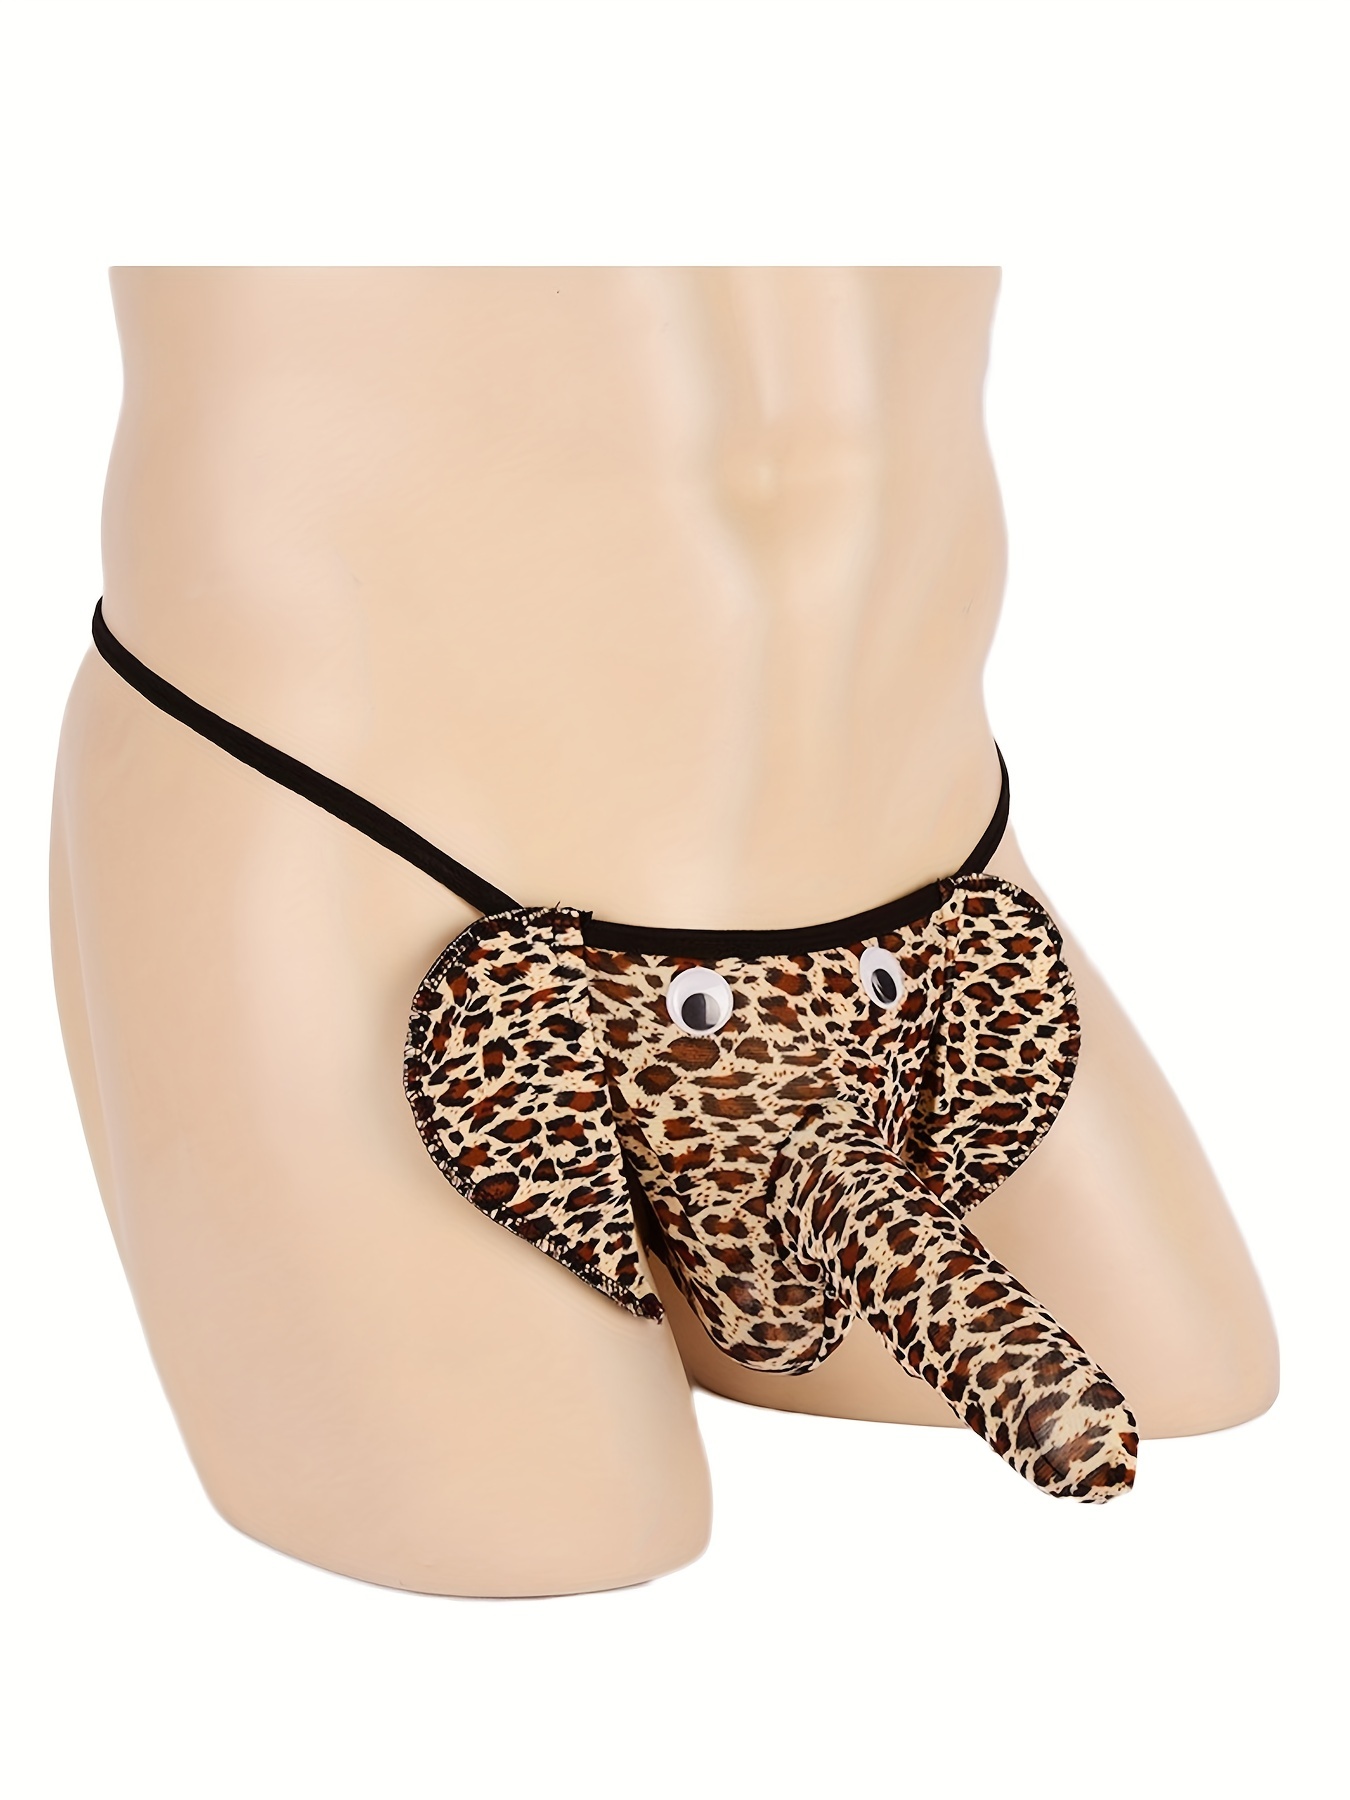 Mens Sexy G-String Elephant Bulge Pouch Panties Briefs Lingerie